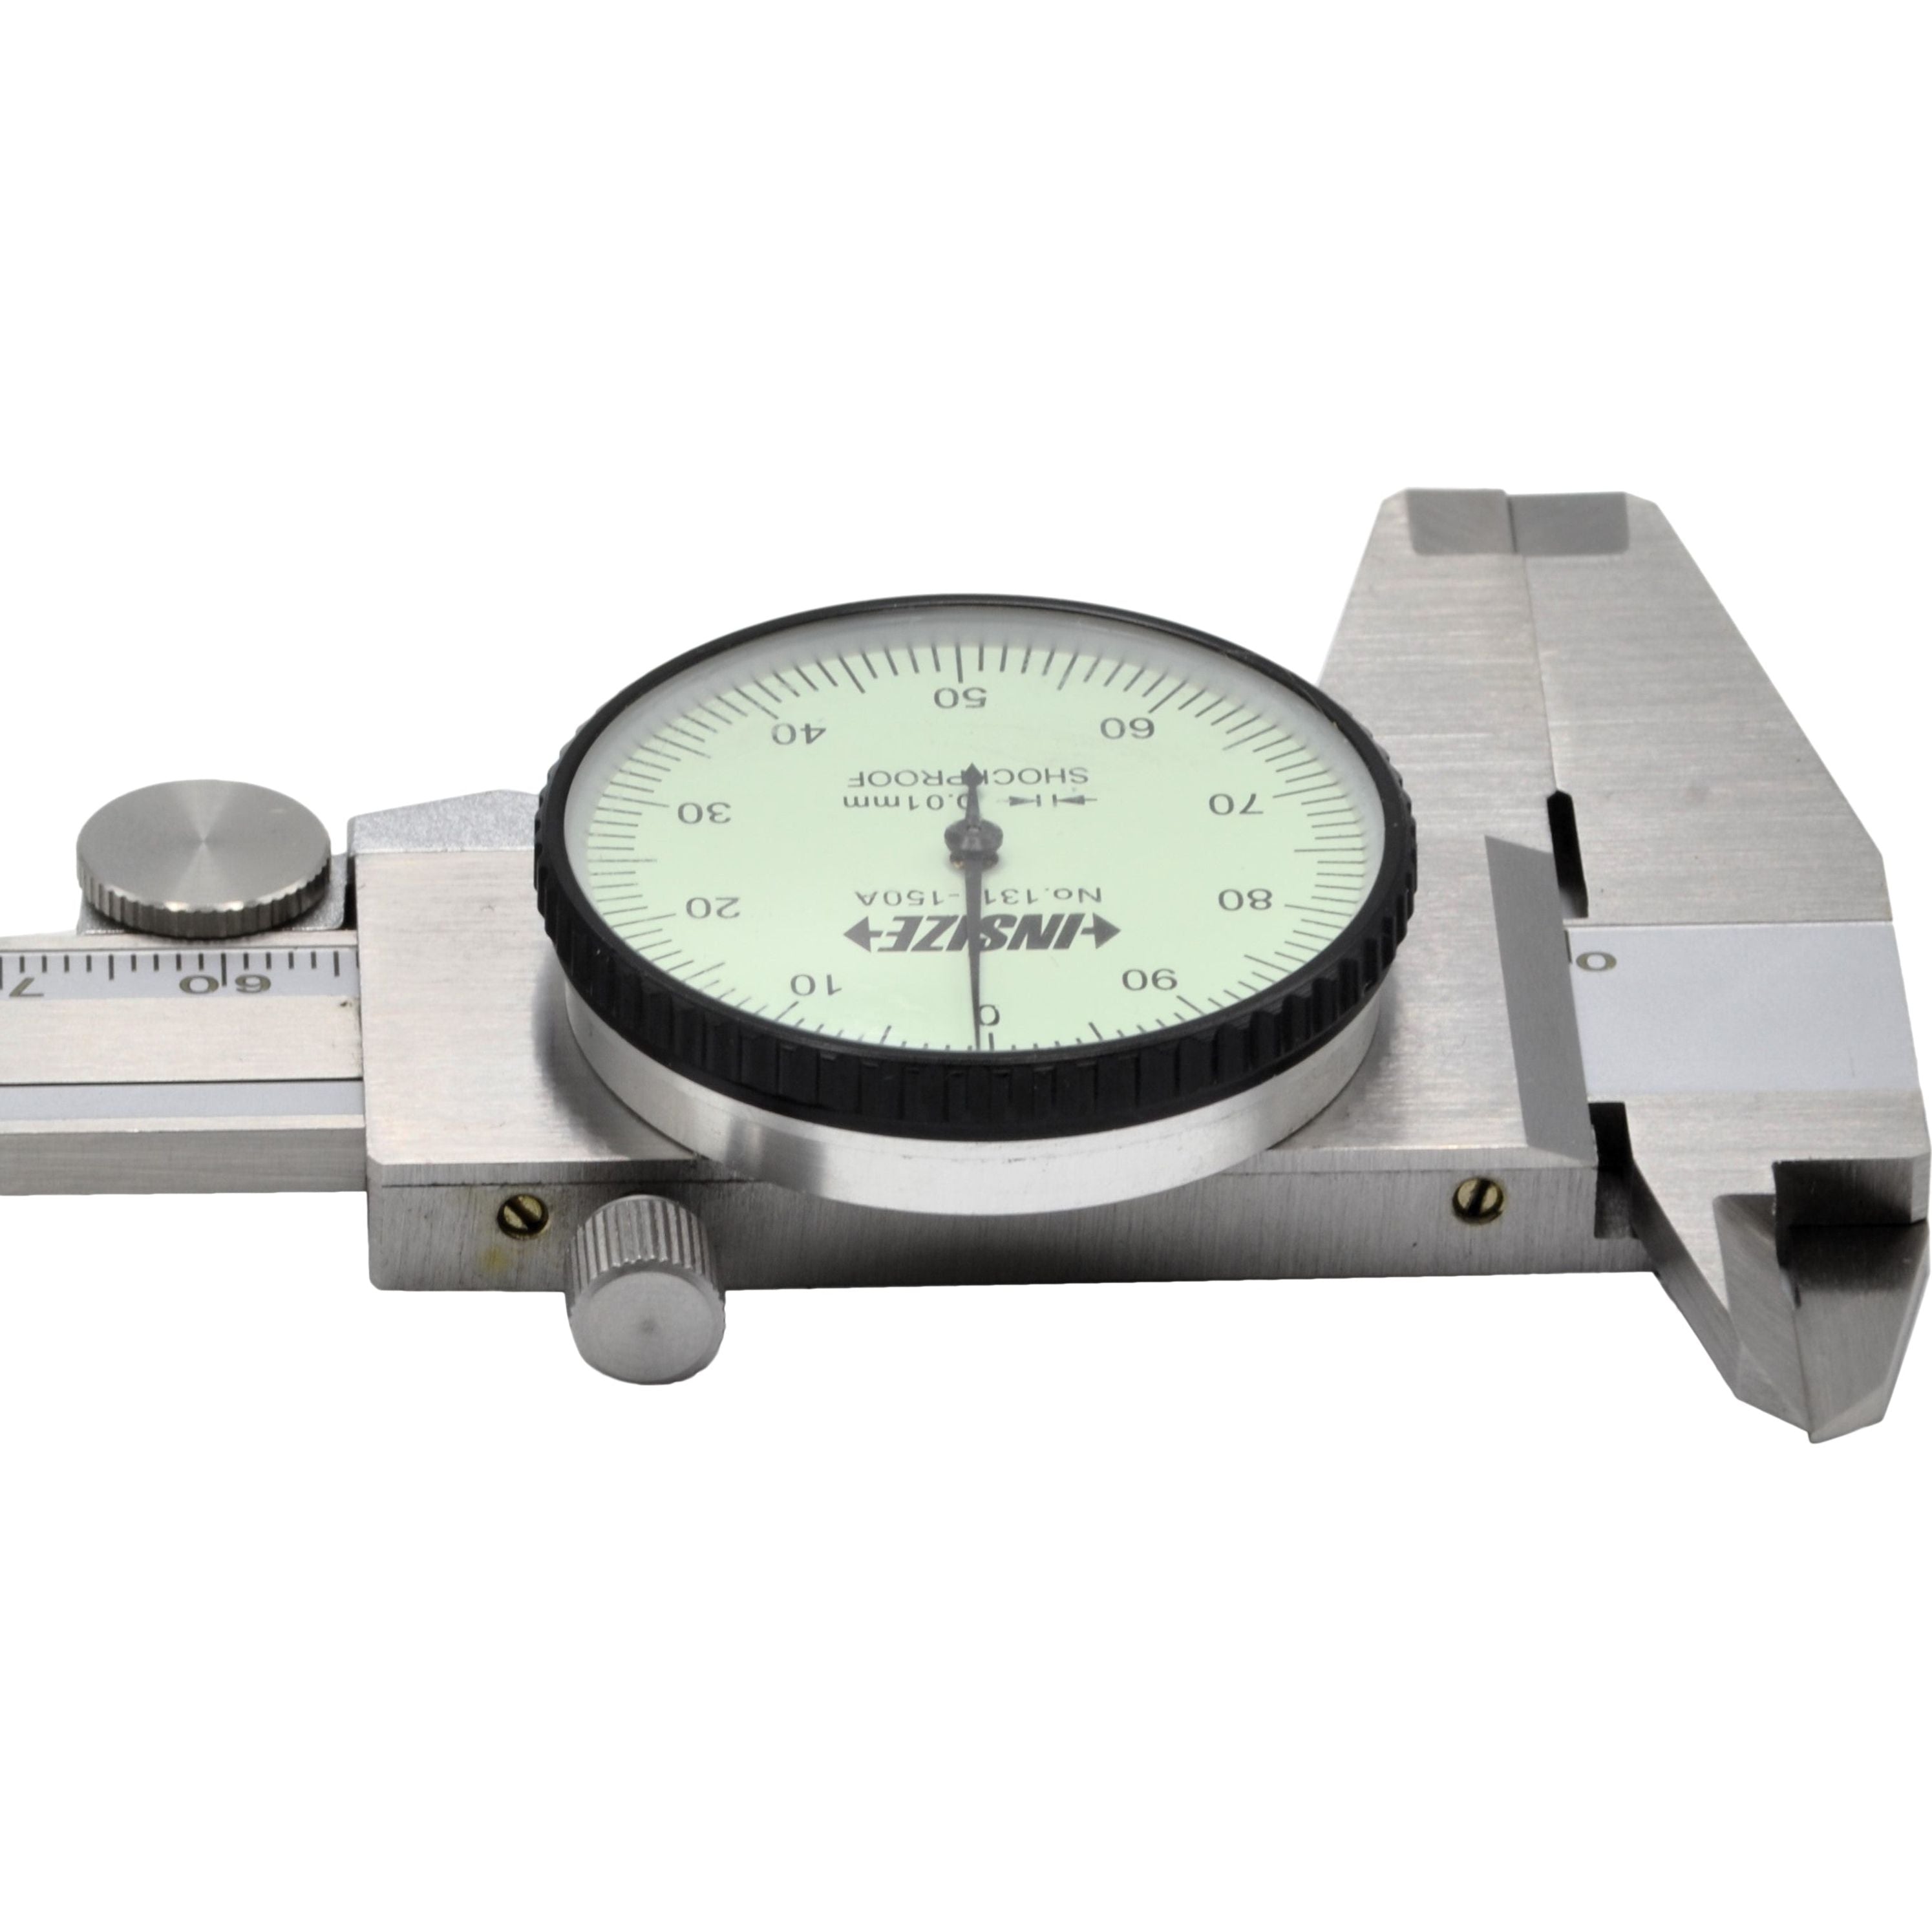 INSIZE Metric Dial Caliper  0-200mm Range Series 1311-200A